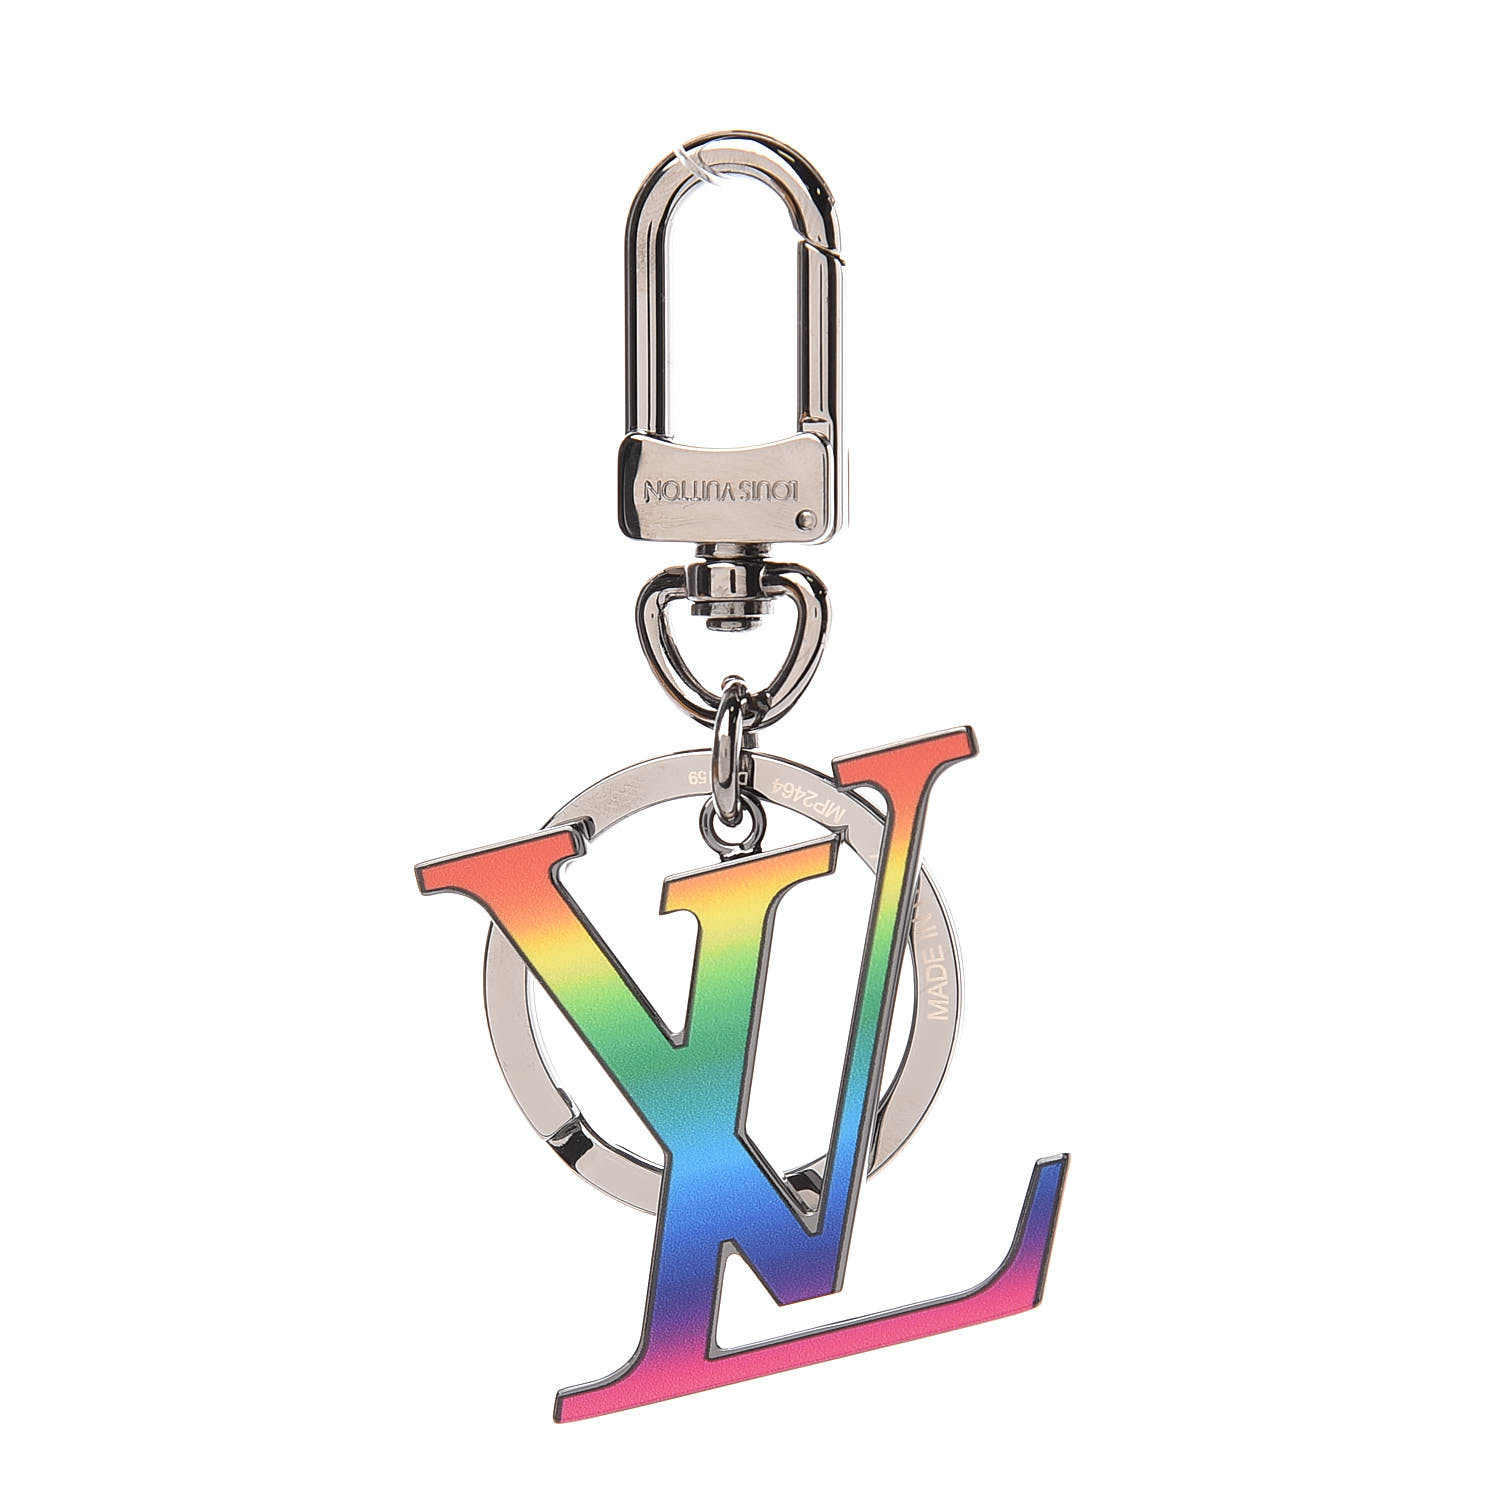 LOUIS VUITTON LV Rainbow MCA Bag Charm Key Holder 388601